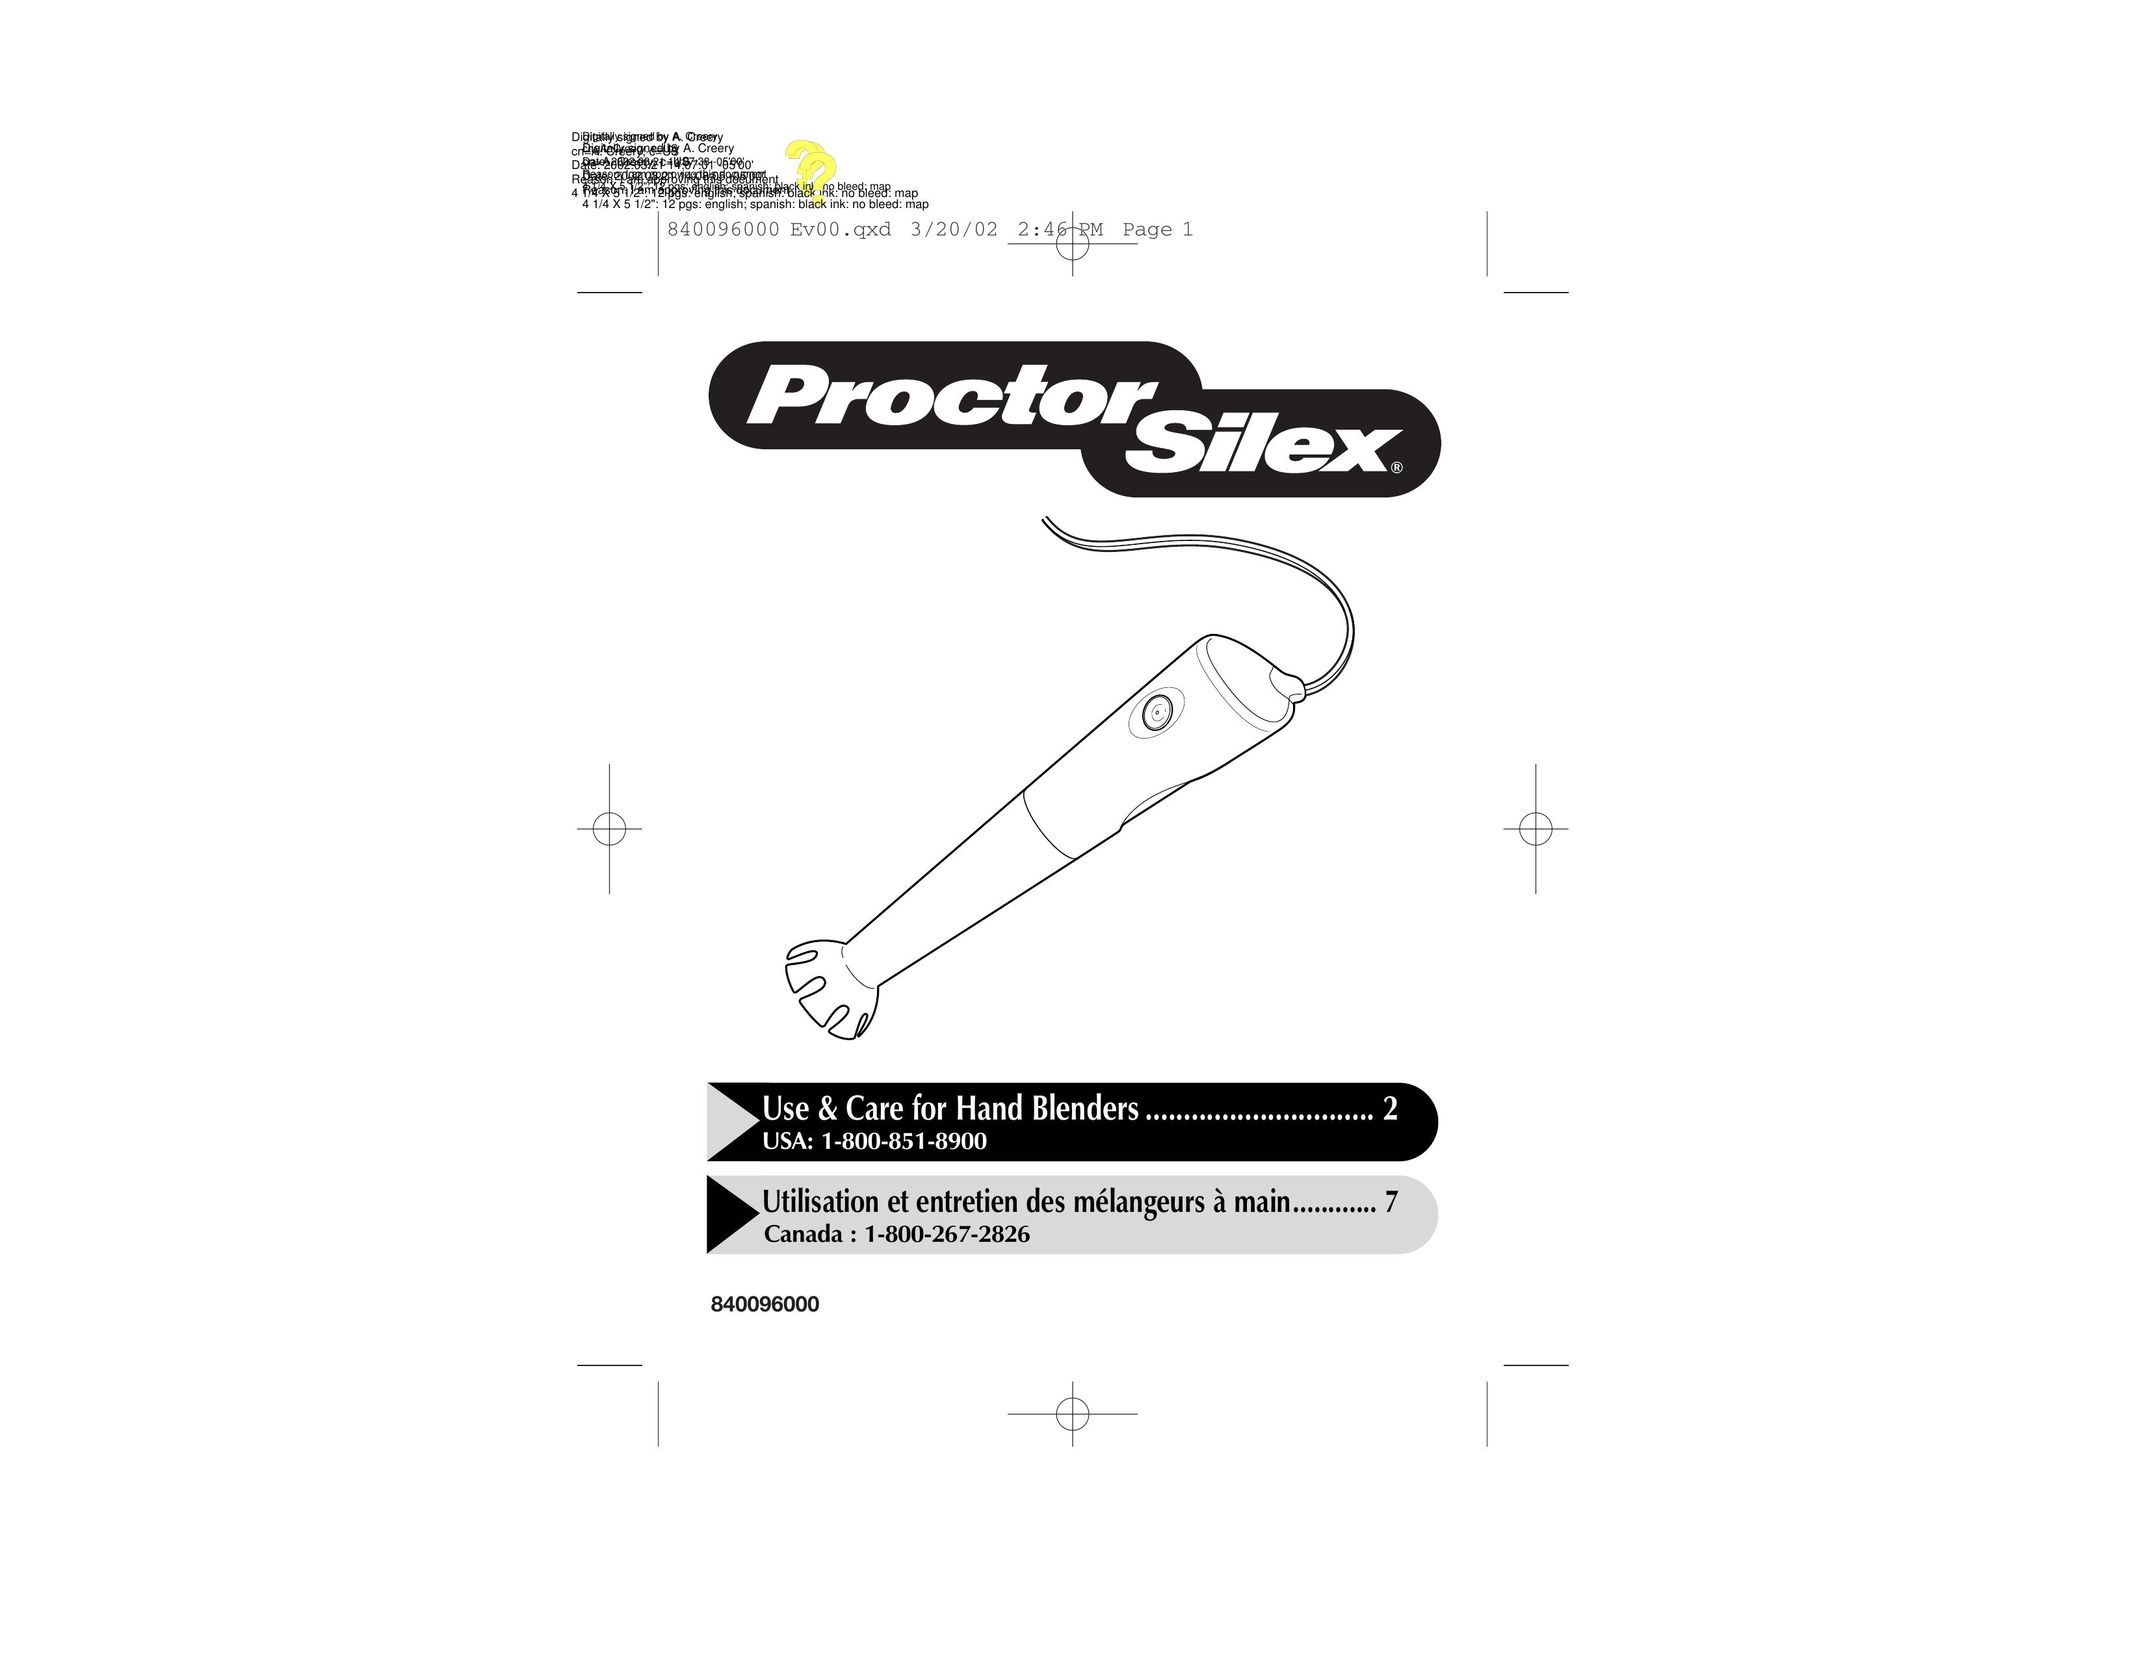 Proctor-Silex 840096000 Blender User Manual